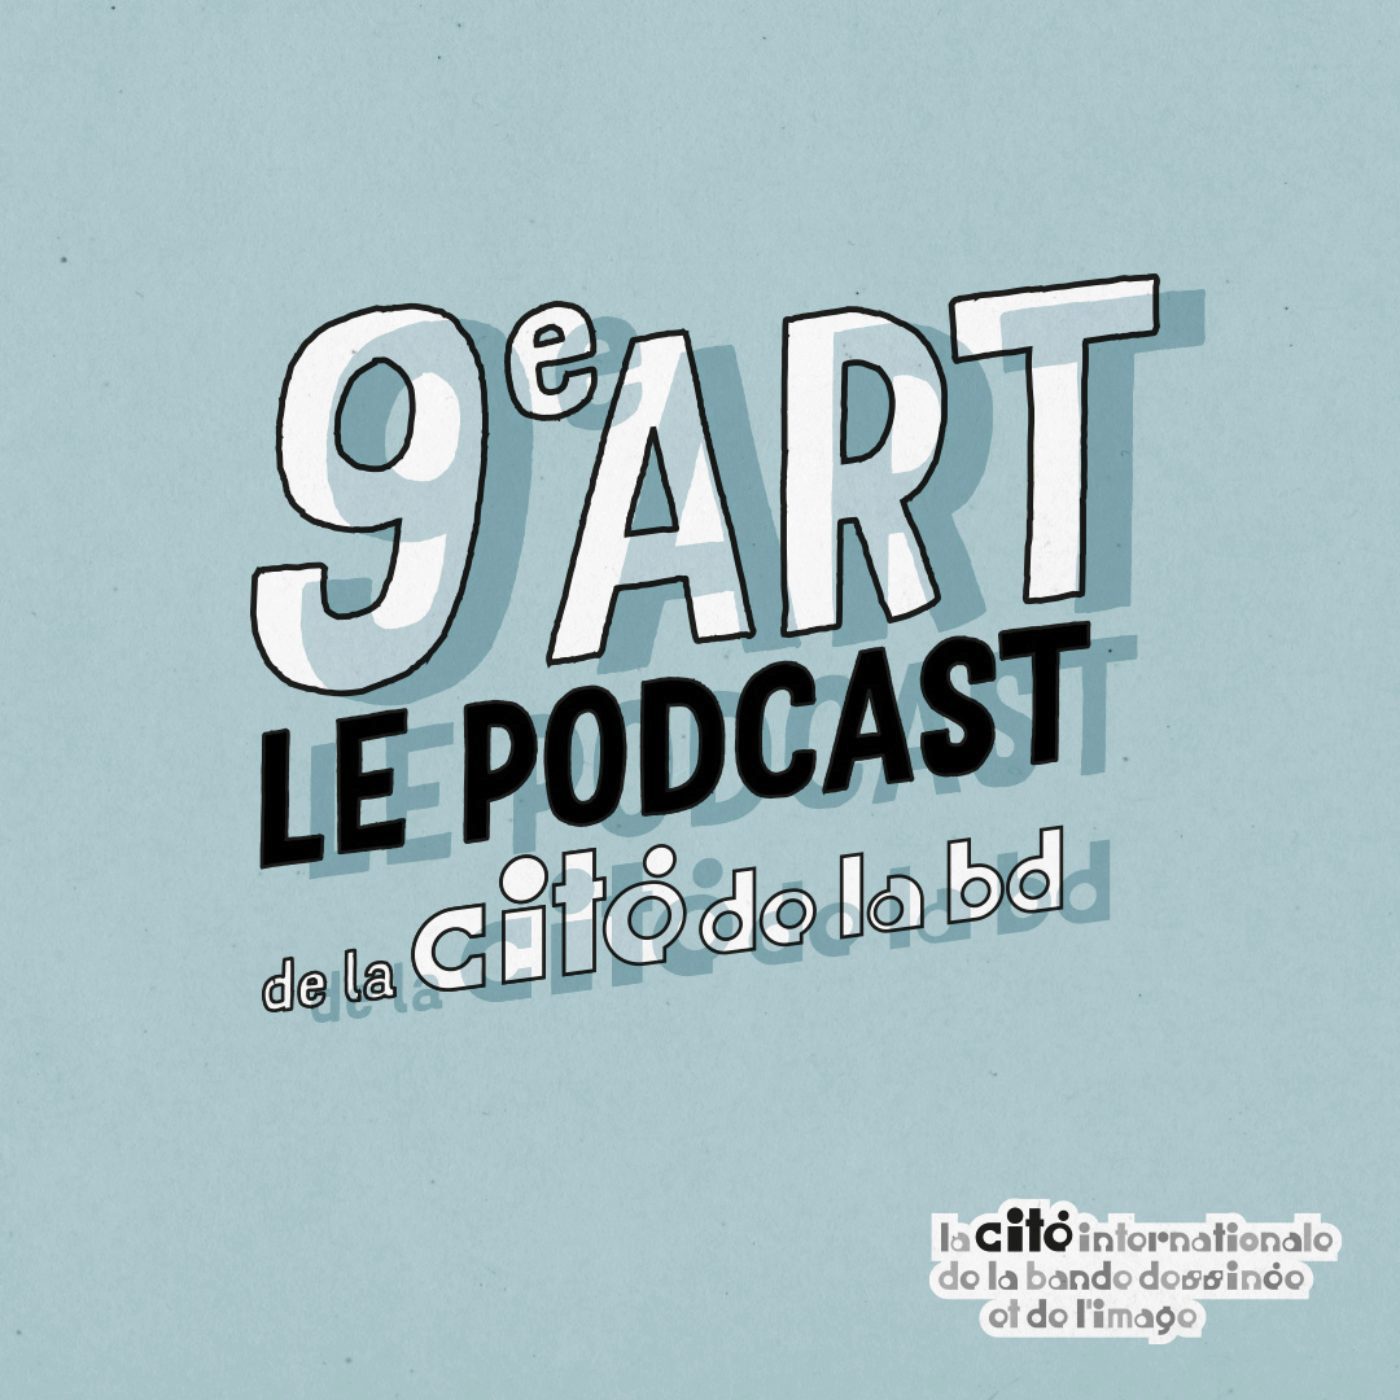 podcast 9e art